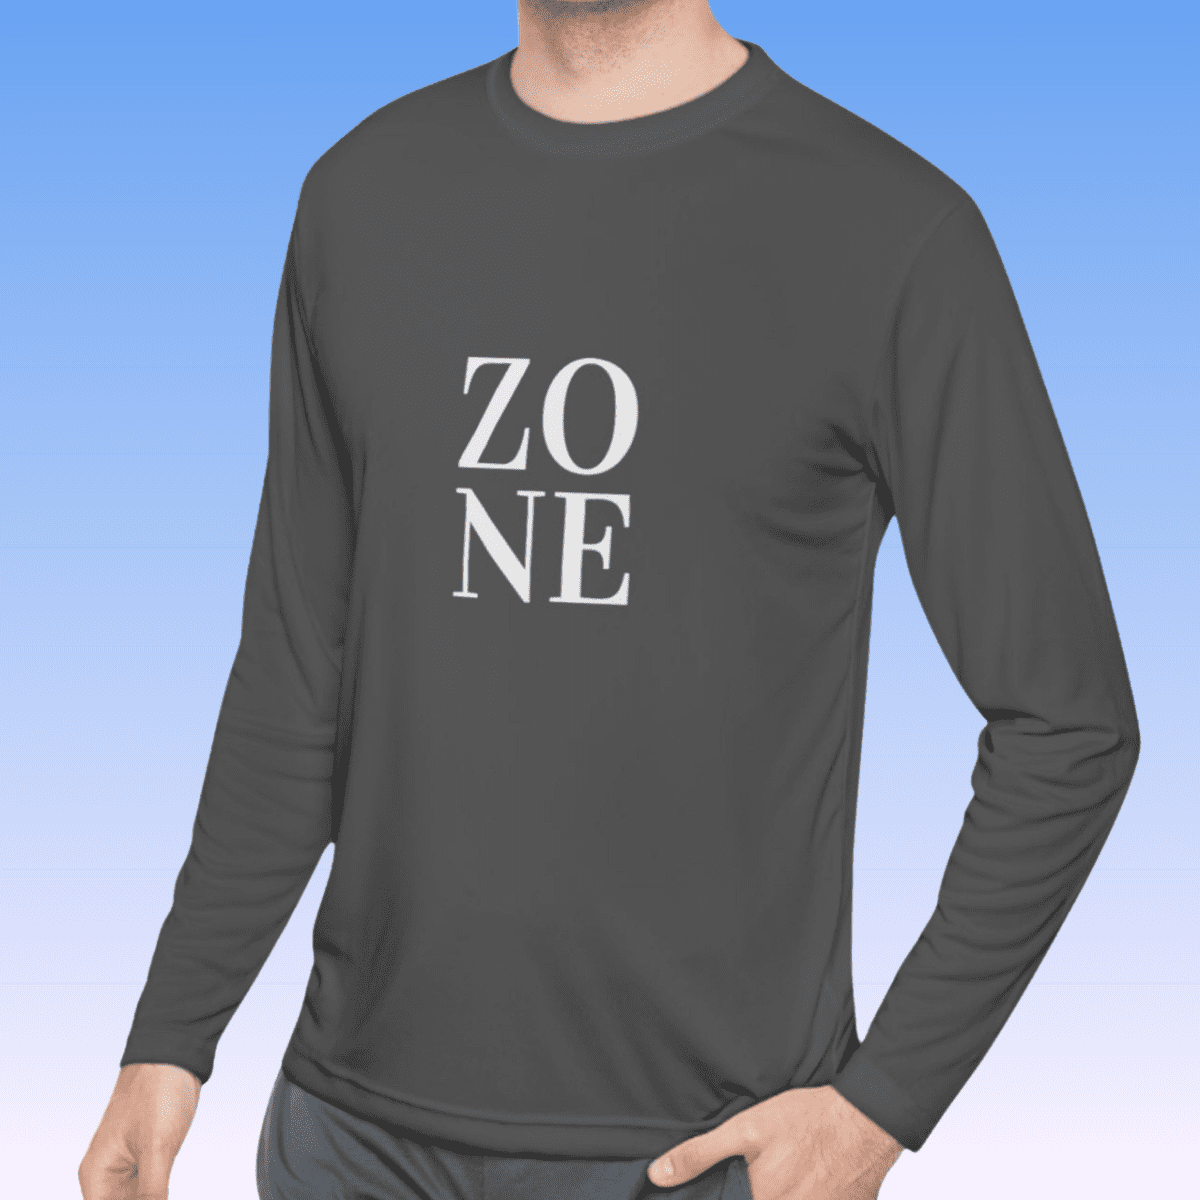 Iron Grey Men's Zone White Long Sleeve Moisture-Wicking Tee